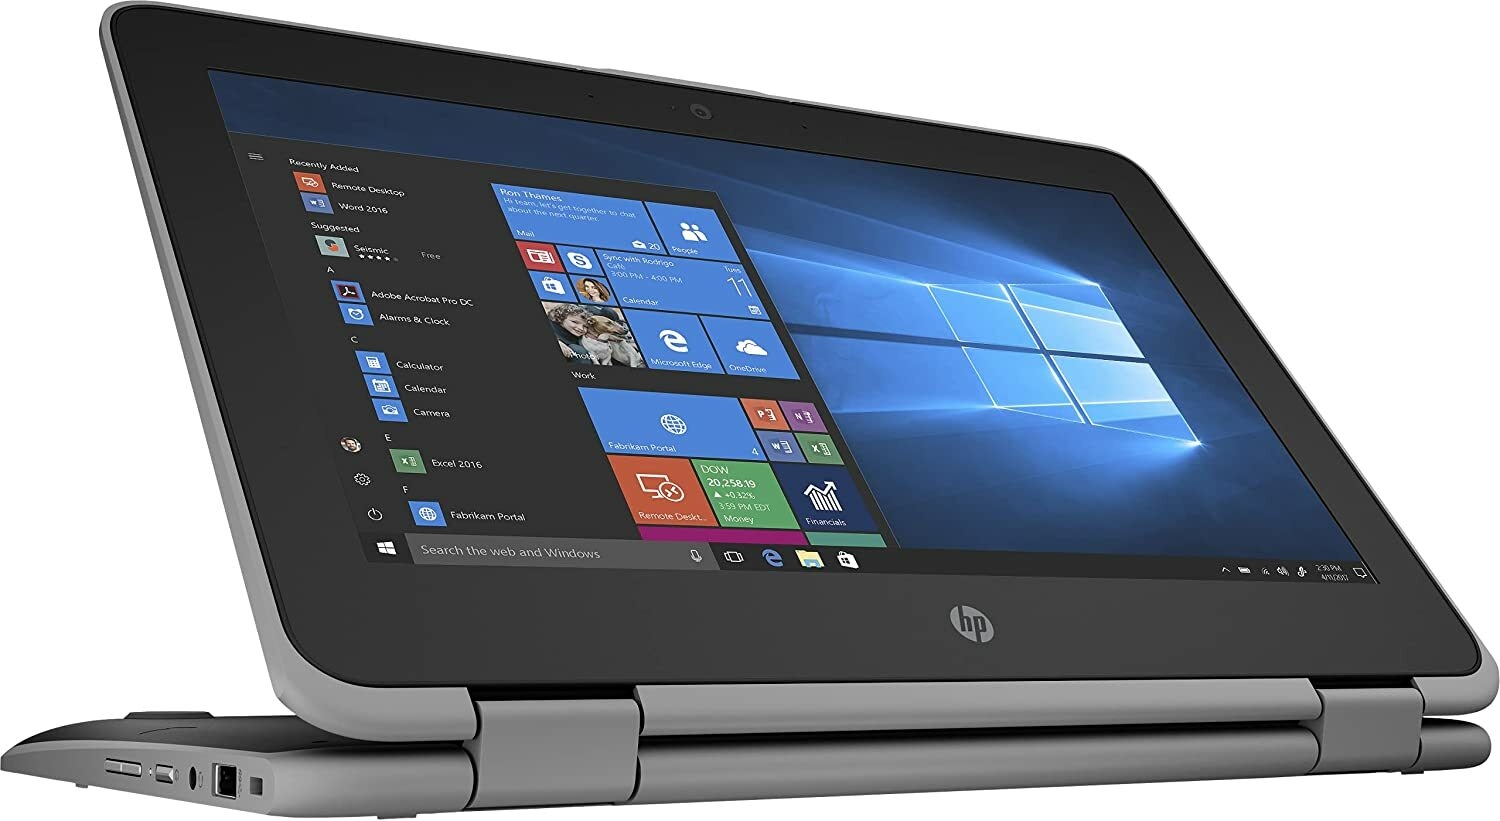 Amazon.com: HP ProBook x360 11 G3 EE Touchscreen Notebook PC (N4000, 64GB  eMMC, 4GB RAM, WiFi+BT5, Webcam) Windows 10 Pro : Electronics